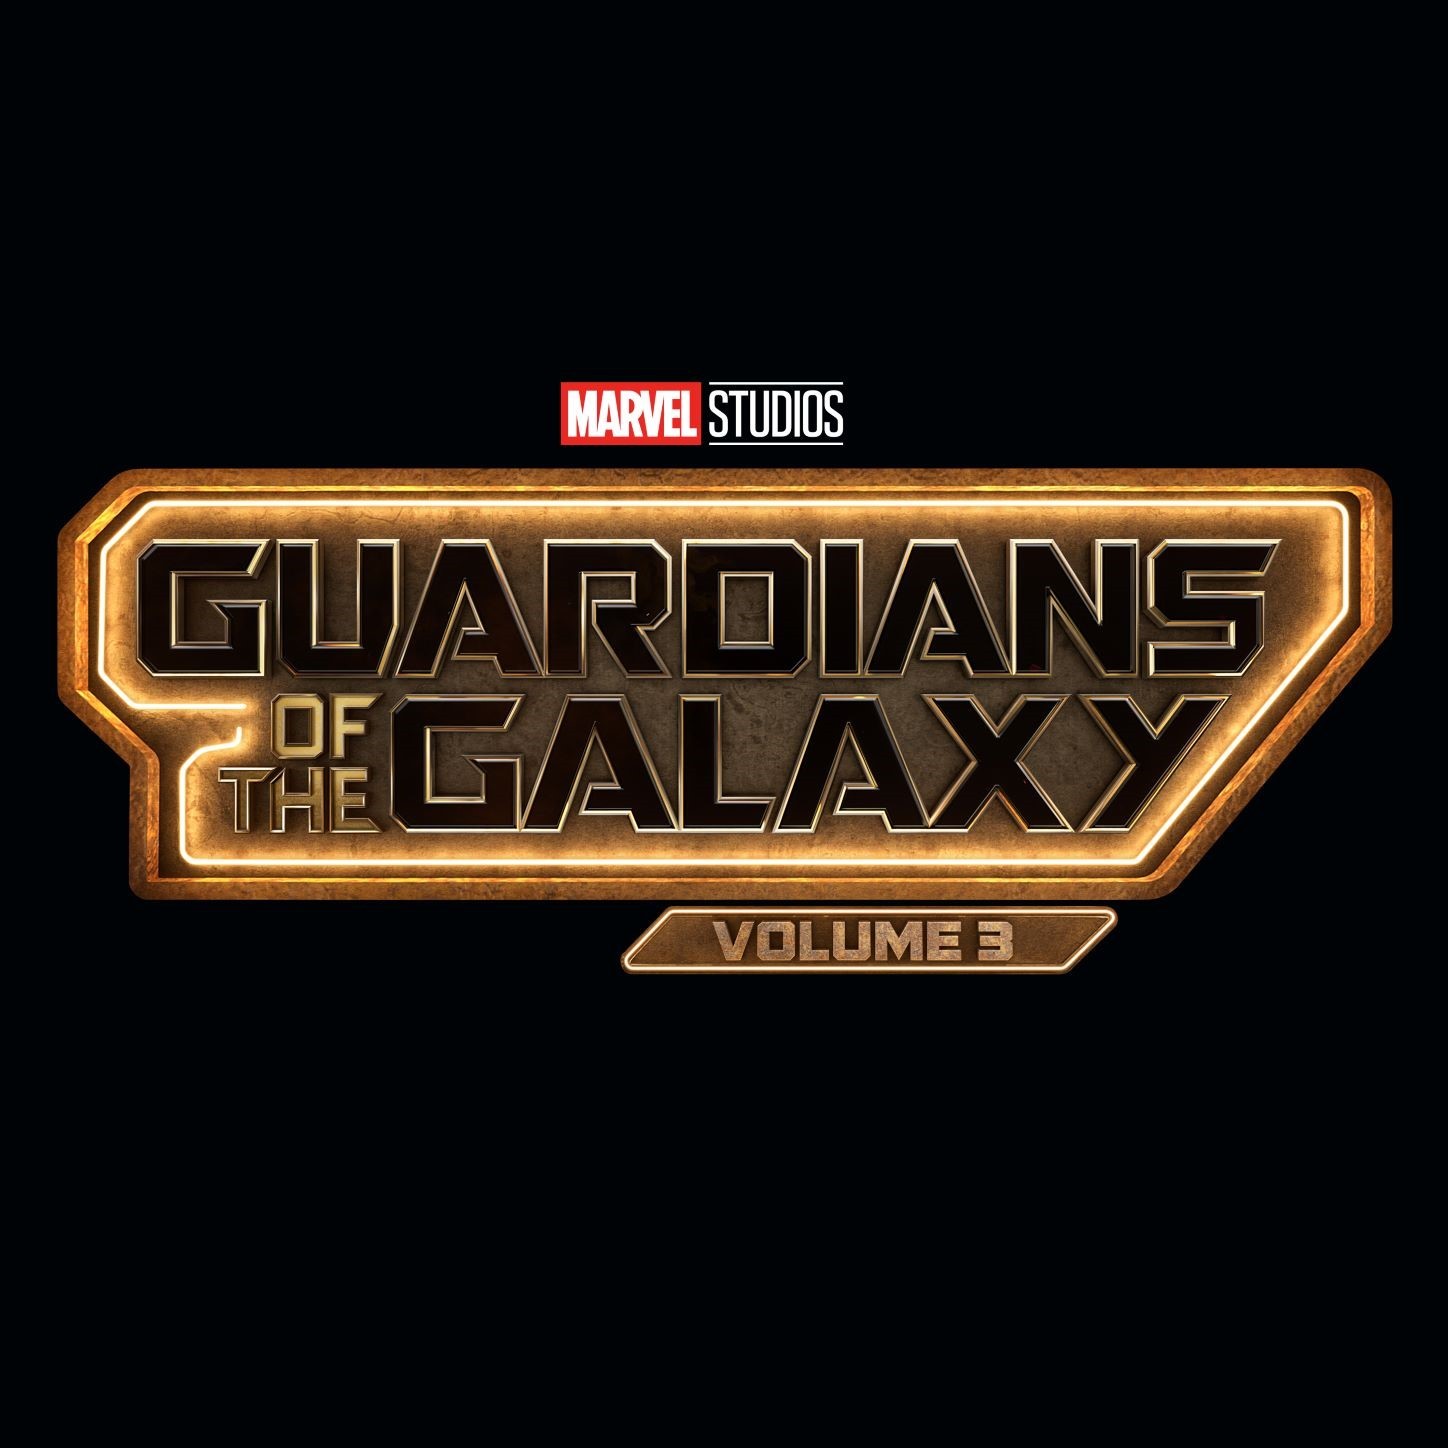 Guardianes Galaxia Volumen 3 Trailer Super Bowl